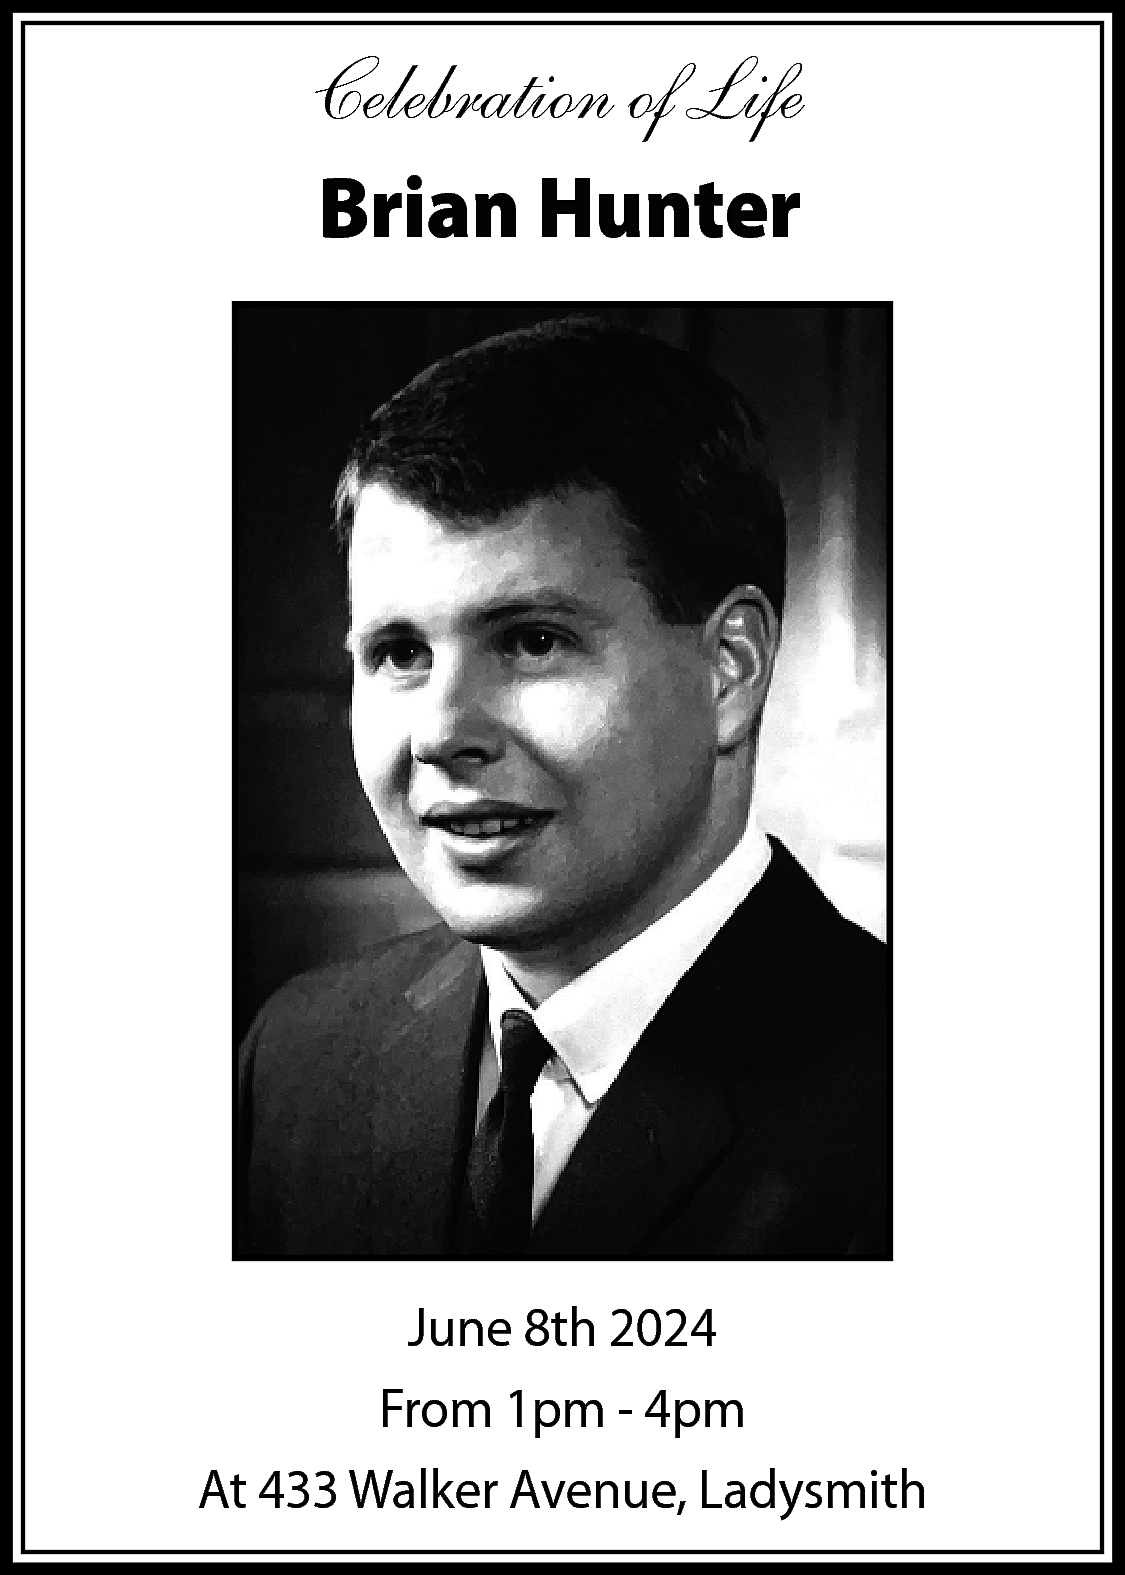 Celebration of Life <br>Brian Hunter  Celebration of Life  Brian Hunter    June 8th 2024  From 1pm - 4pm  At 433 Walker Avenue, Ladysmith    